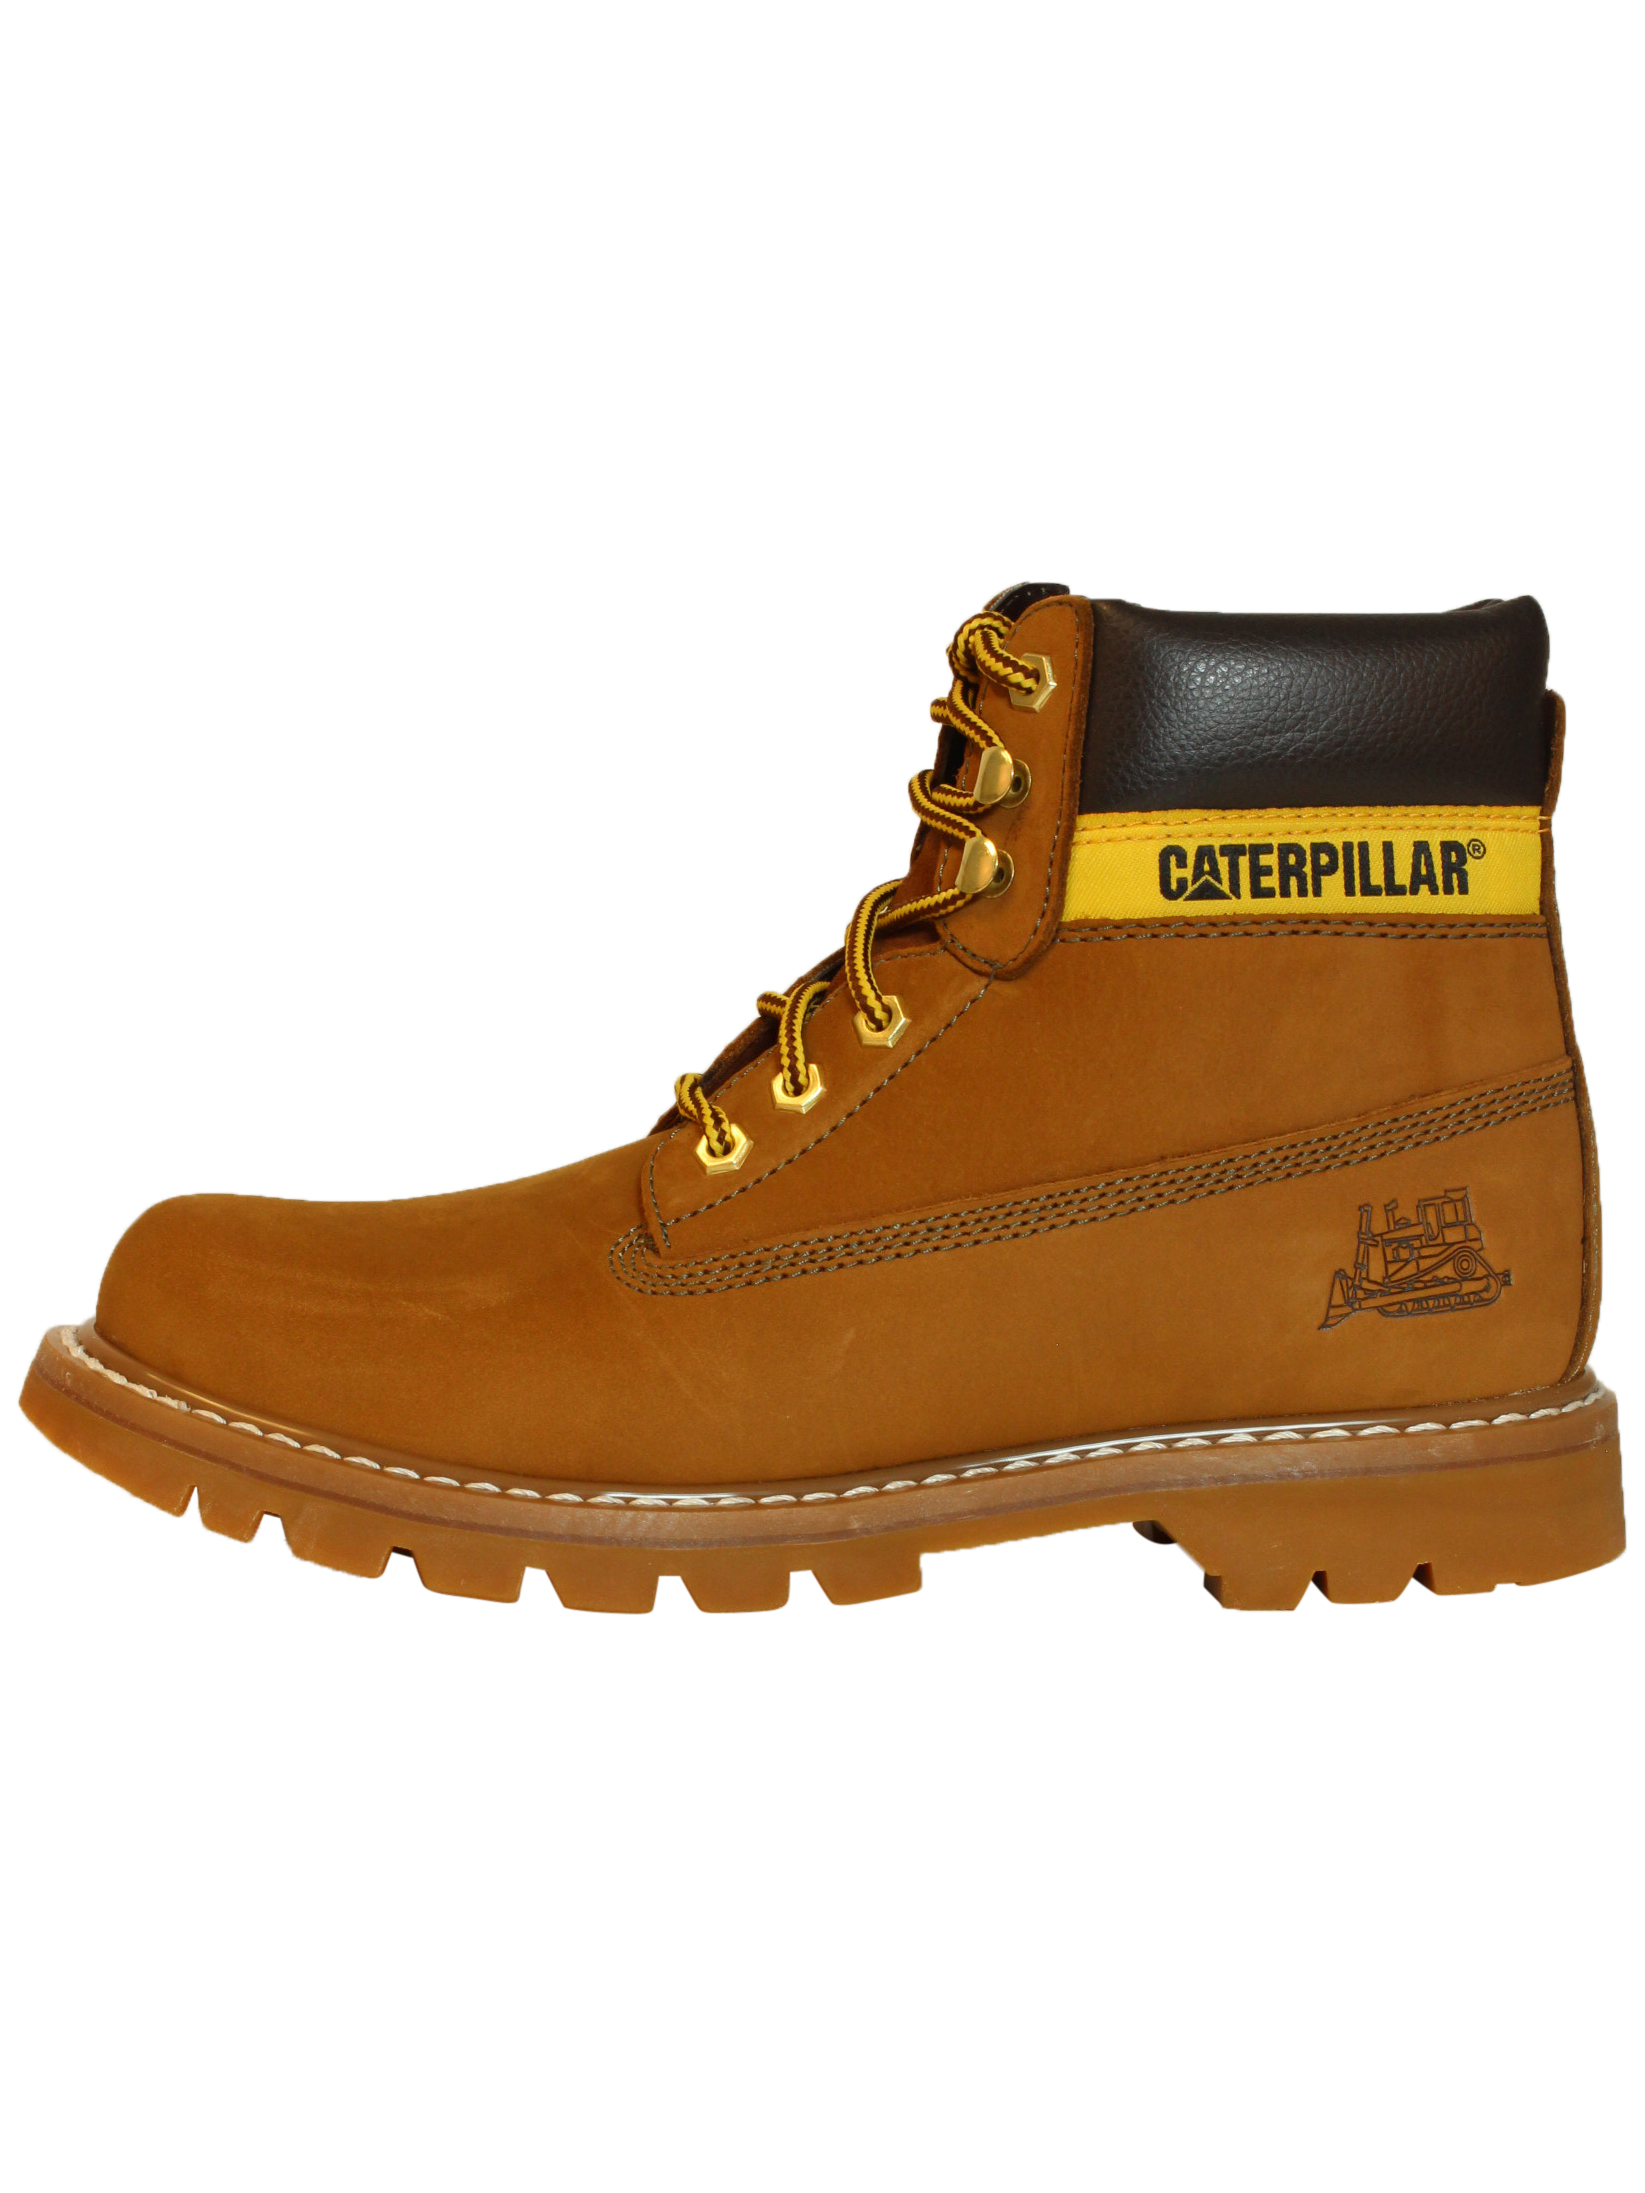 caterpillar colorado sundance boots